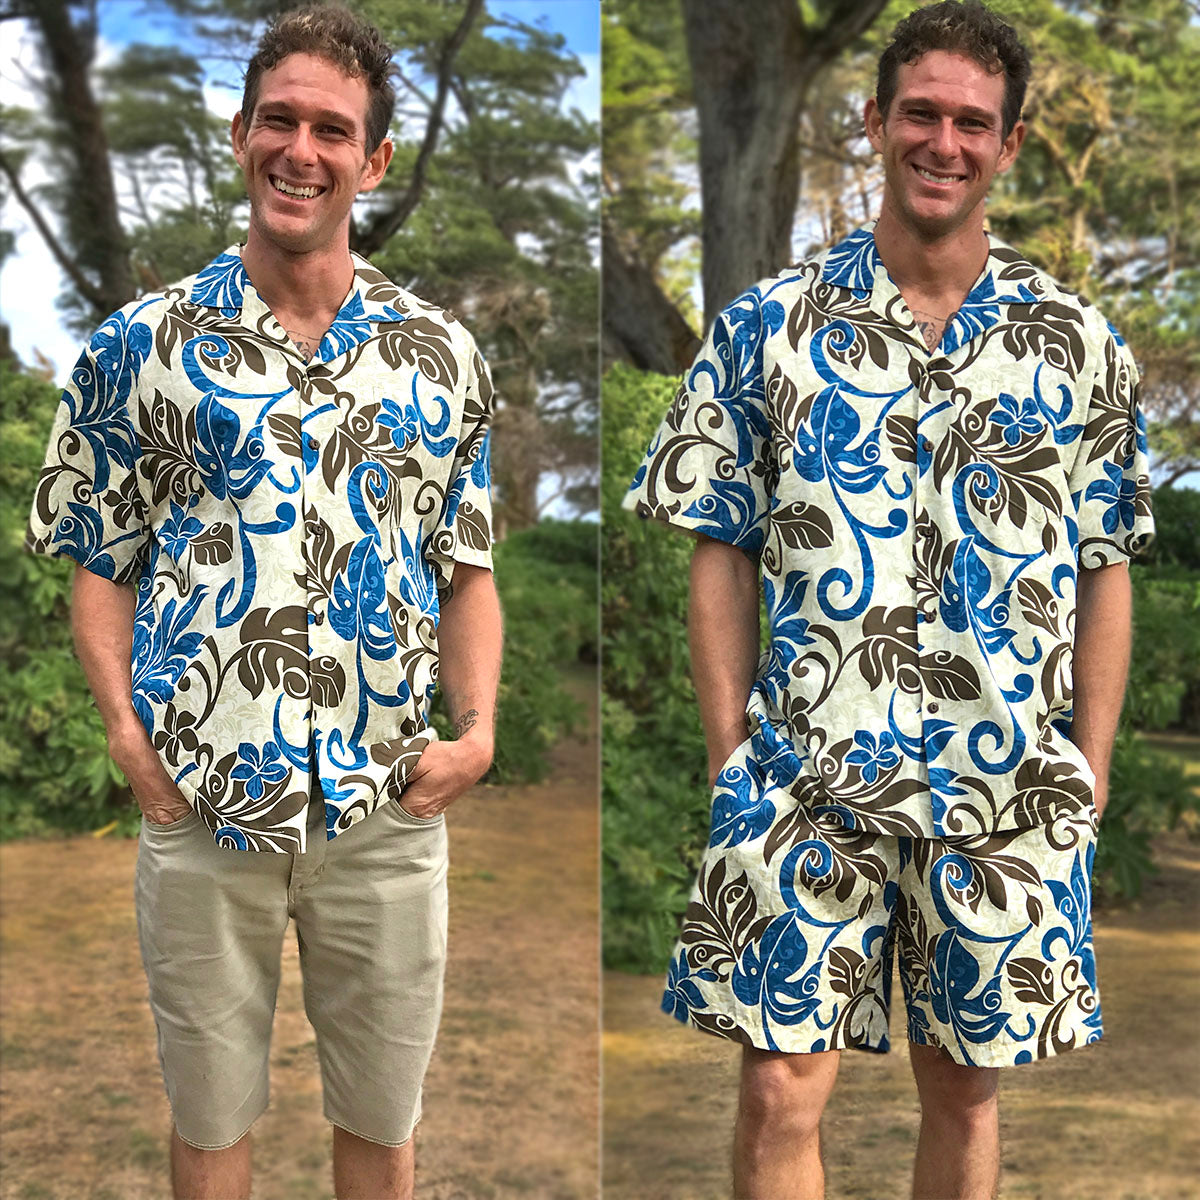 Aloha shirt with solid shorts vs Aloha shirt with printed shorts